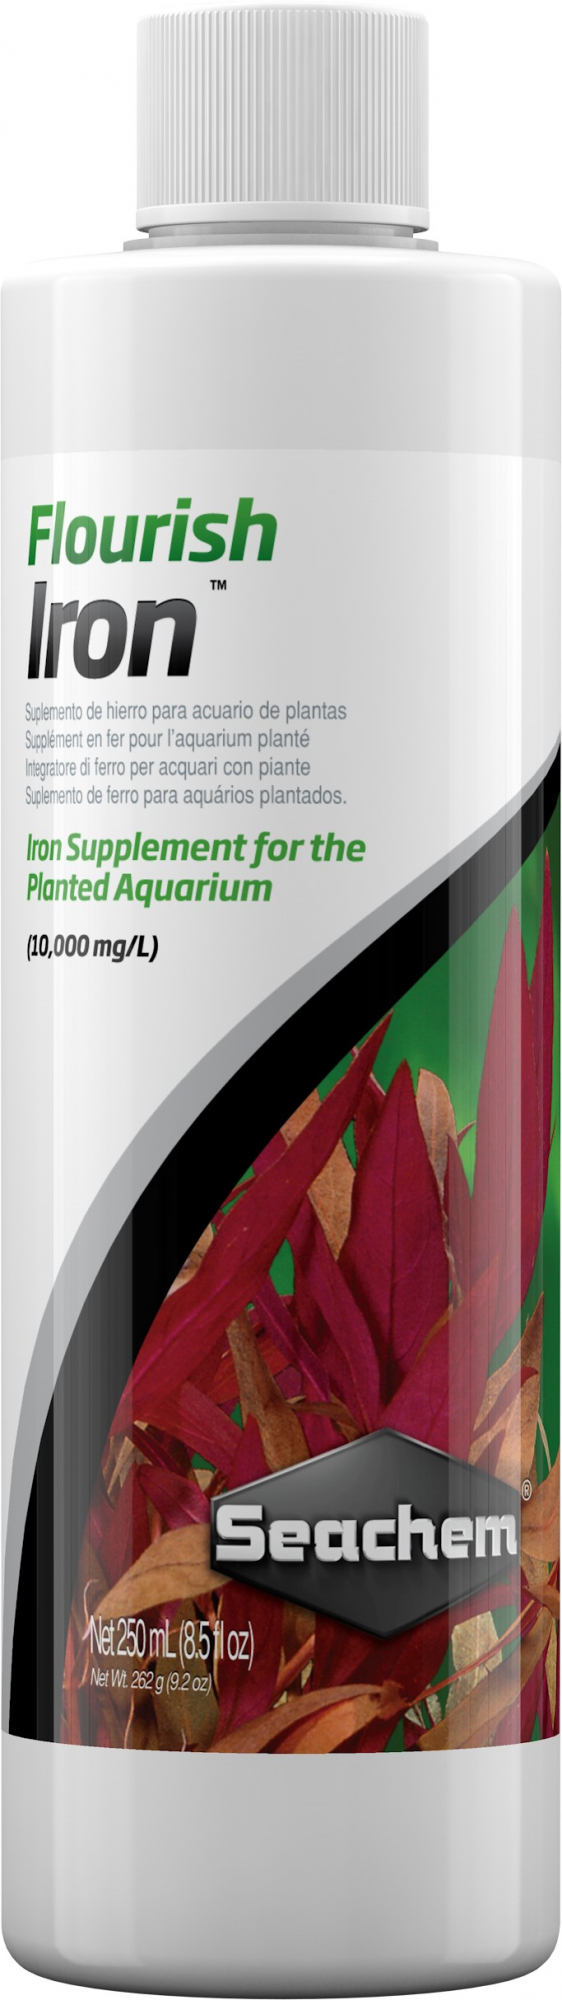 Seachem Flourish Iron Hierro para plantas de acuario